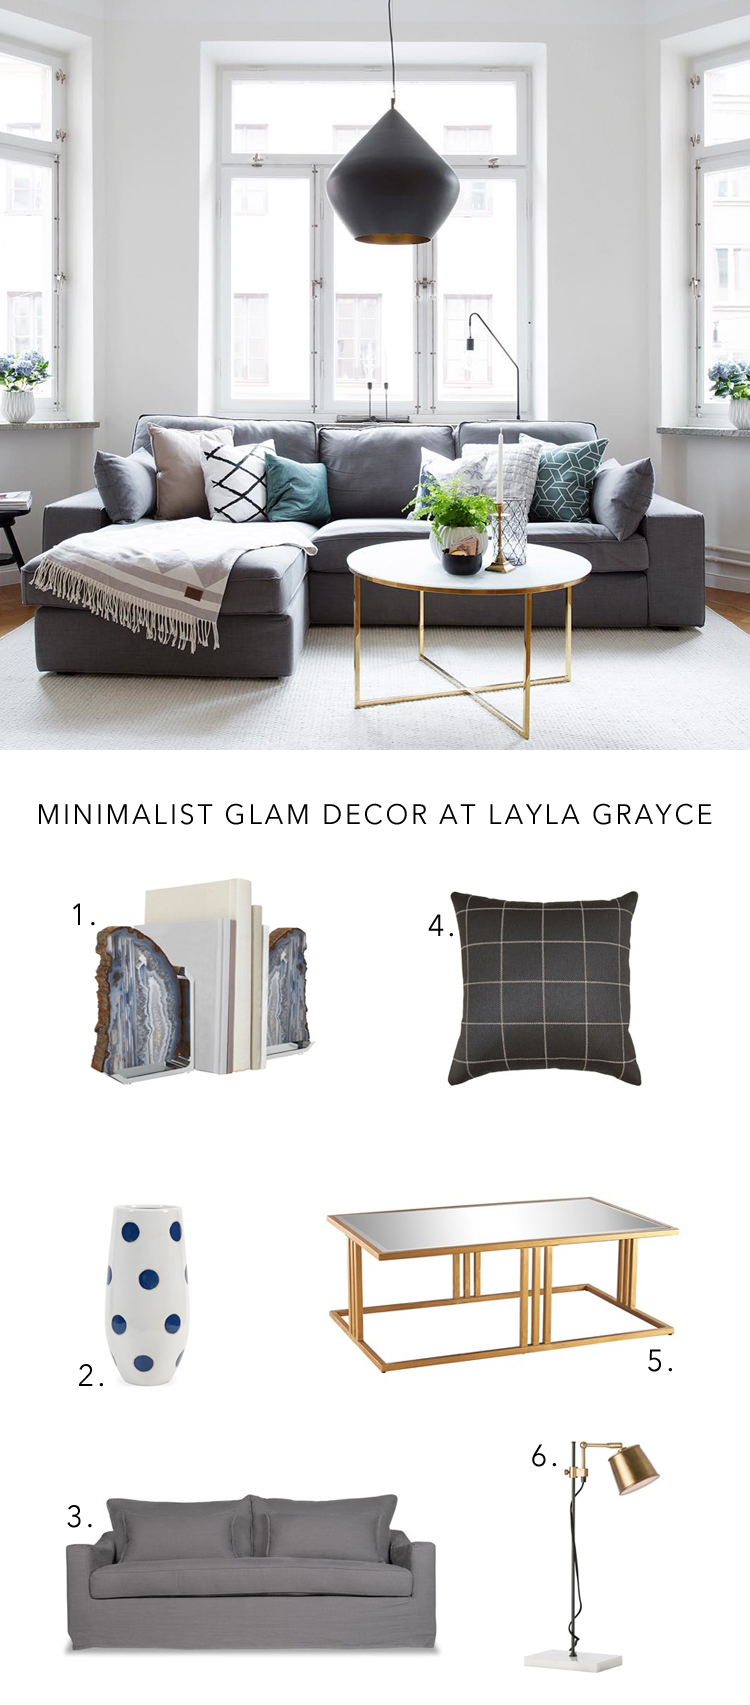 glam minimalist decor shopping via @citysage